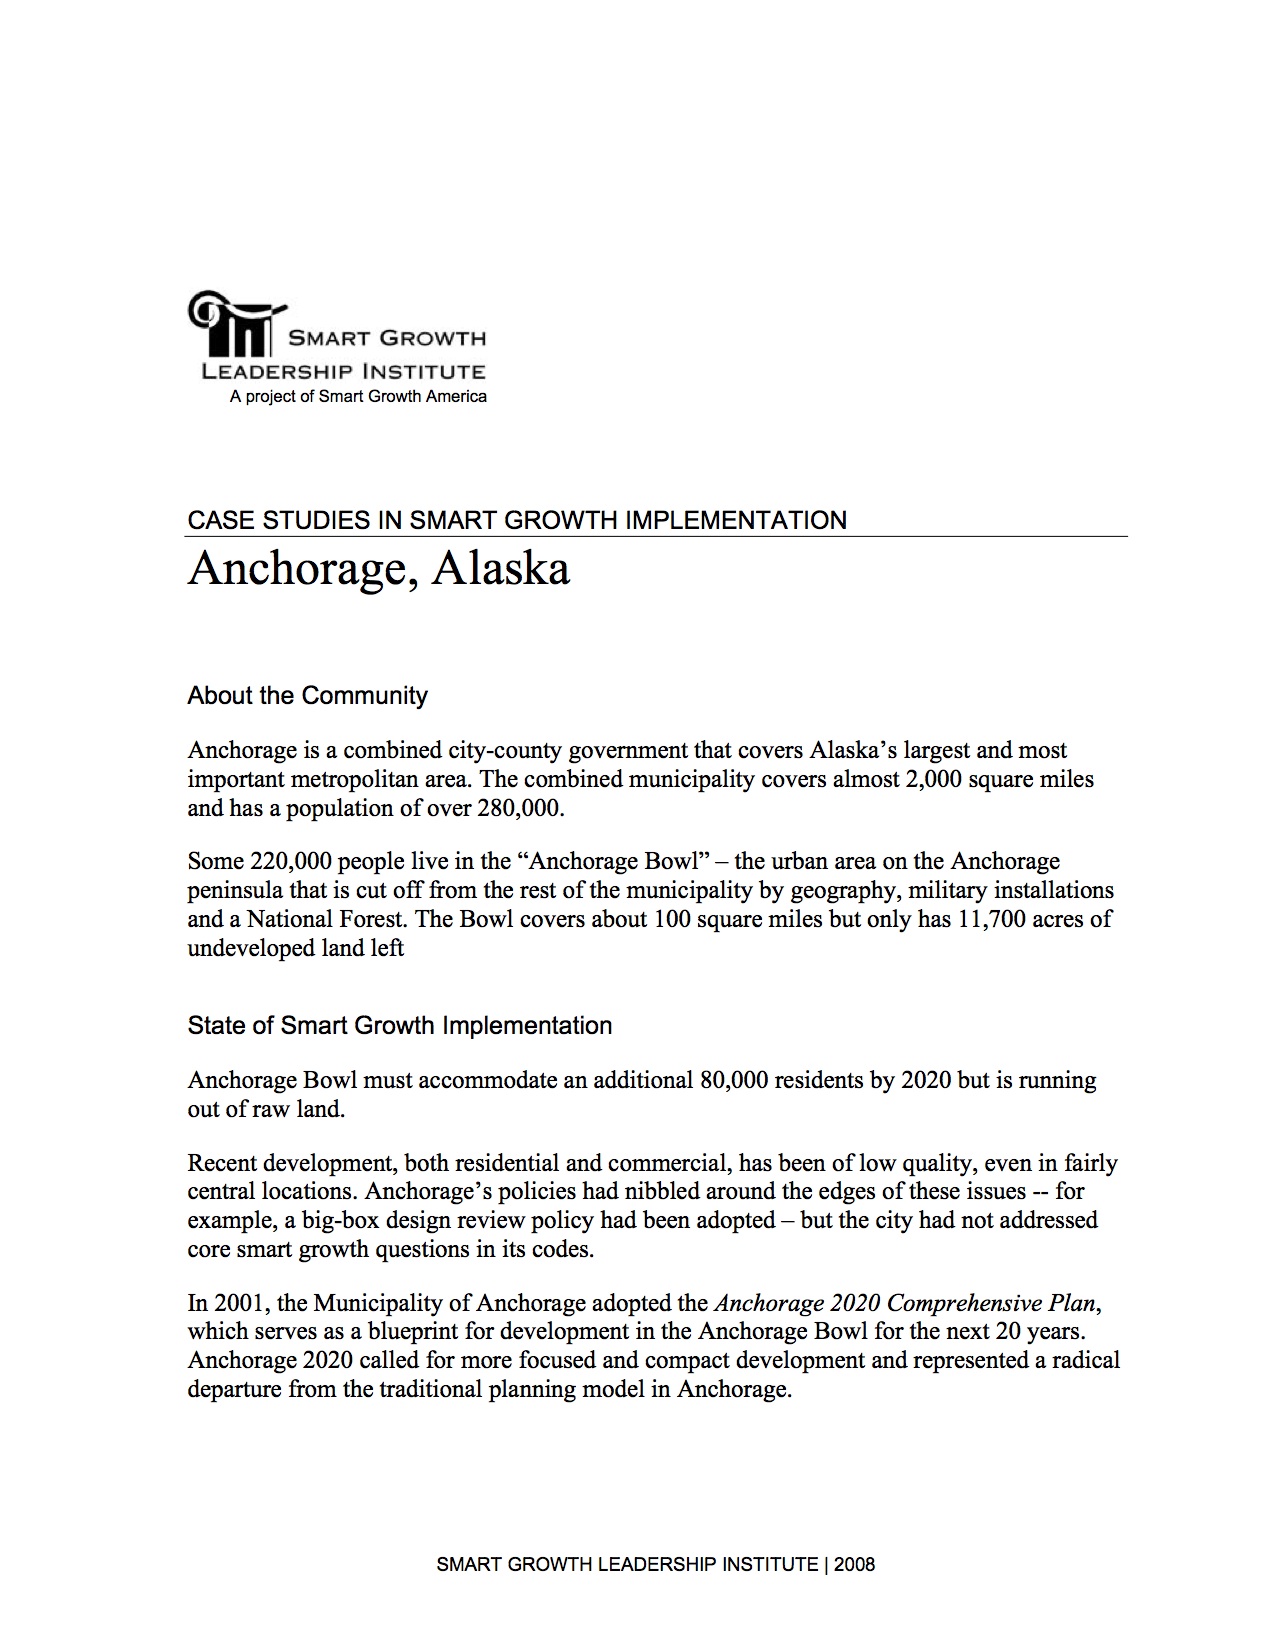 Case Studies in Smart Growth Implementation: Anchorage, Alaska